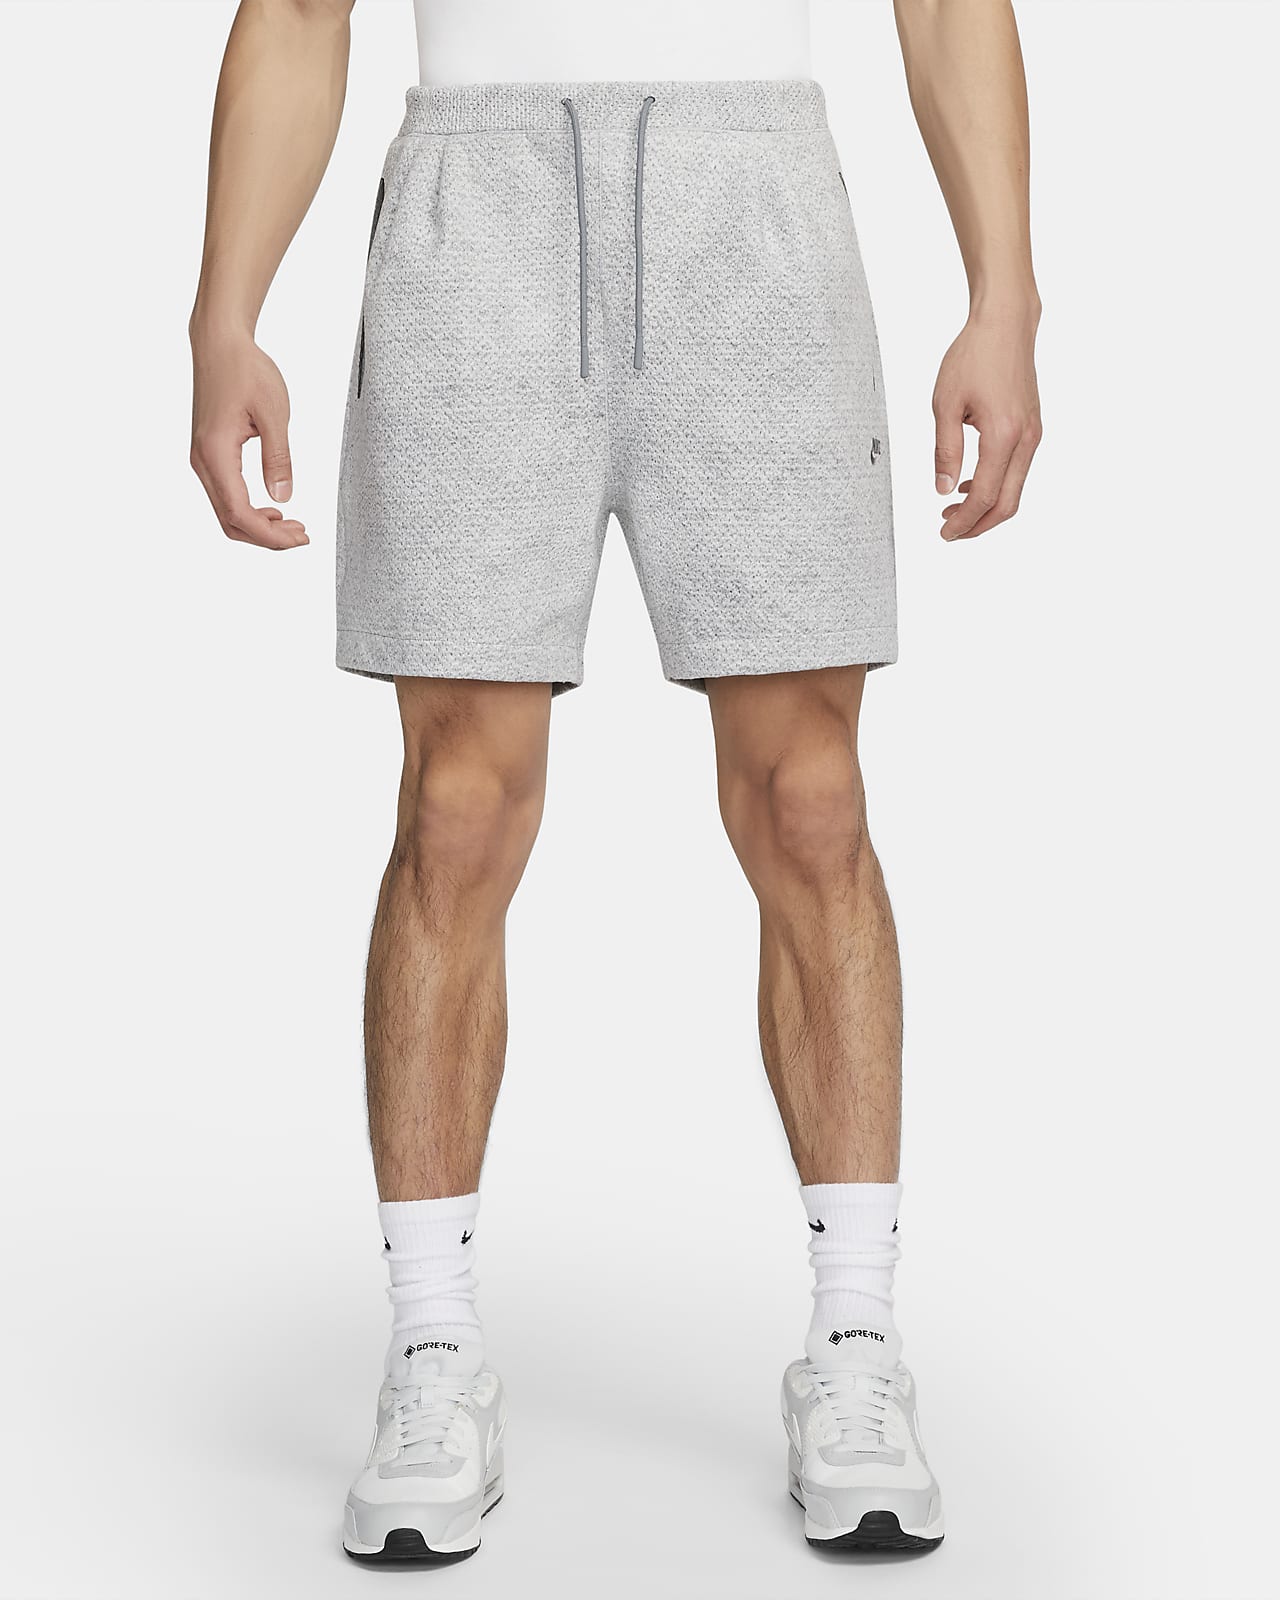 Grey Shorts.